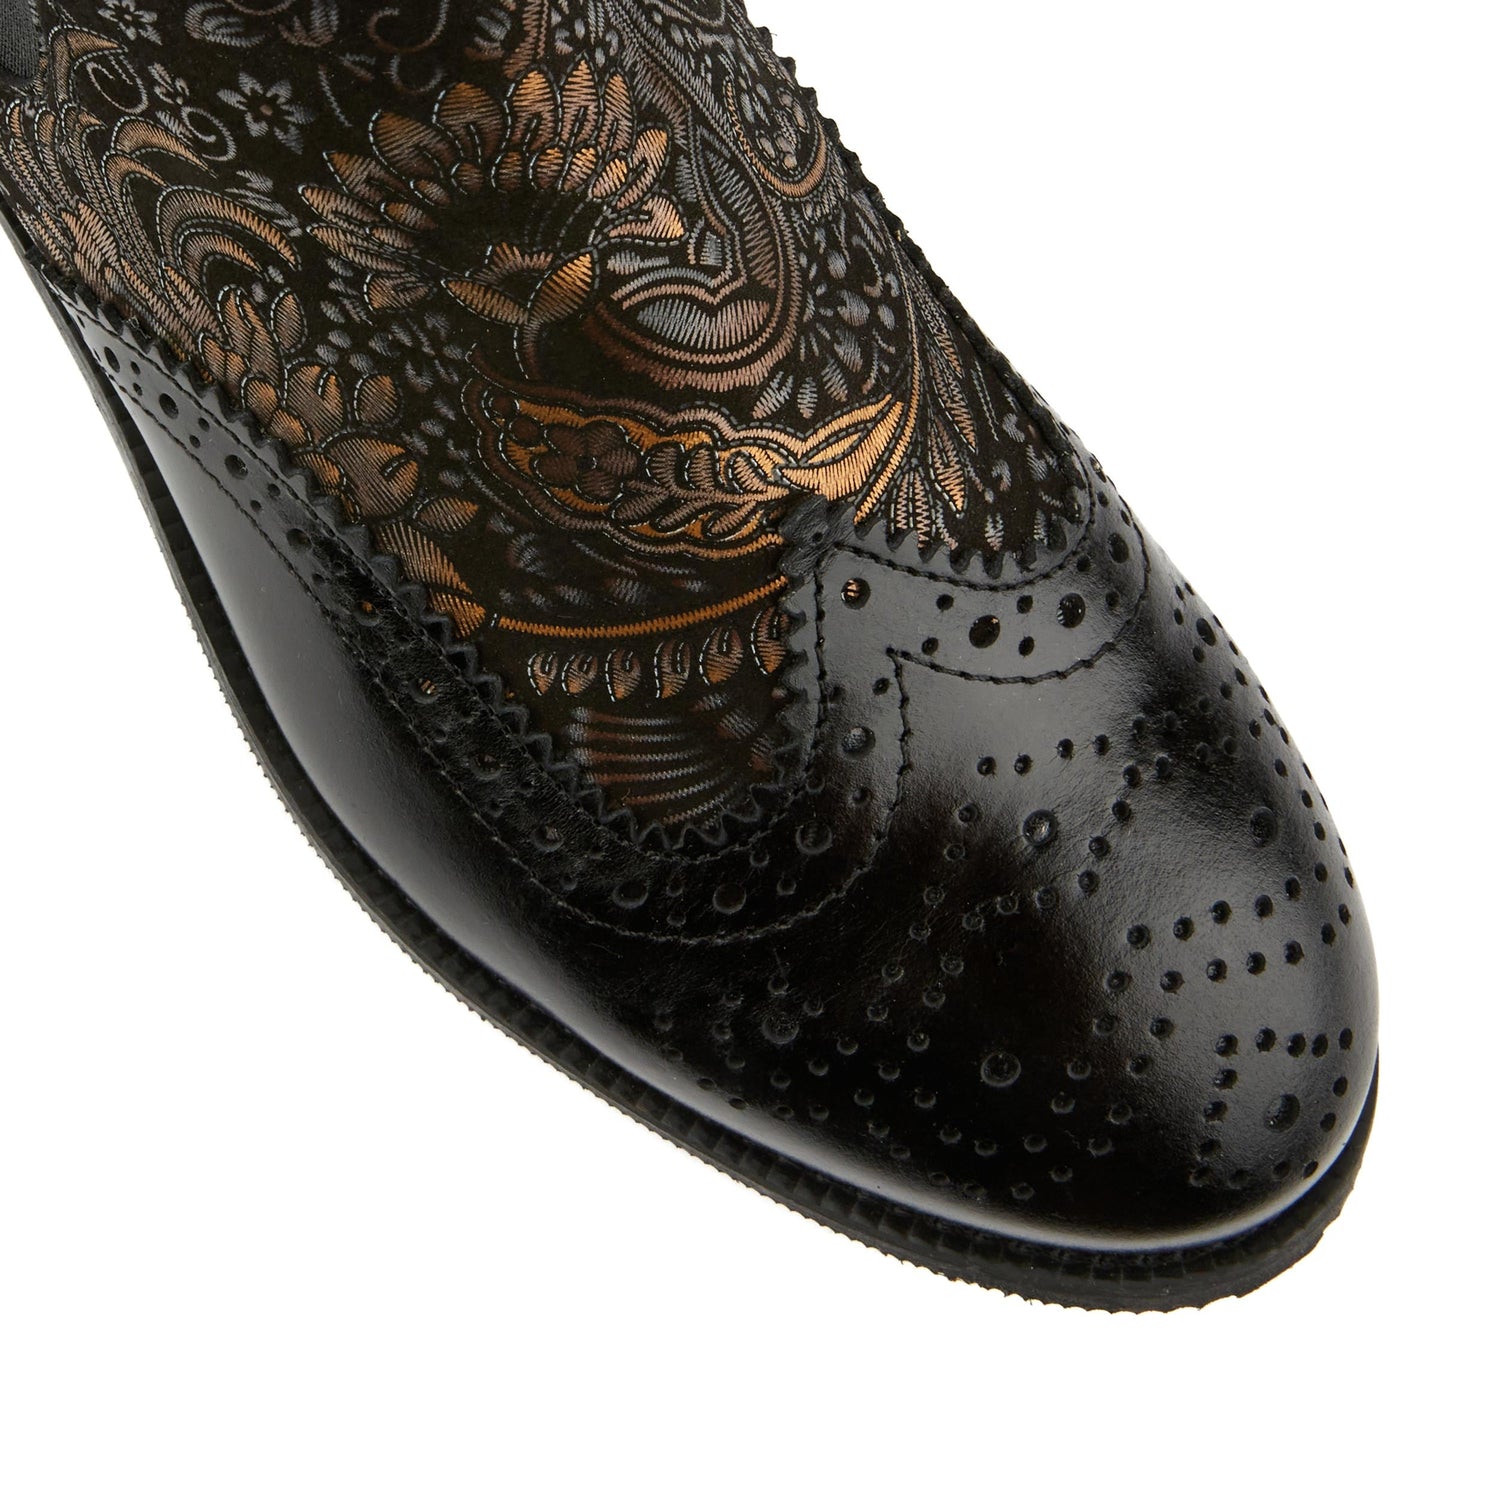 Mamacita - Black & Gold Ankle Boots Embassy London 